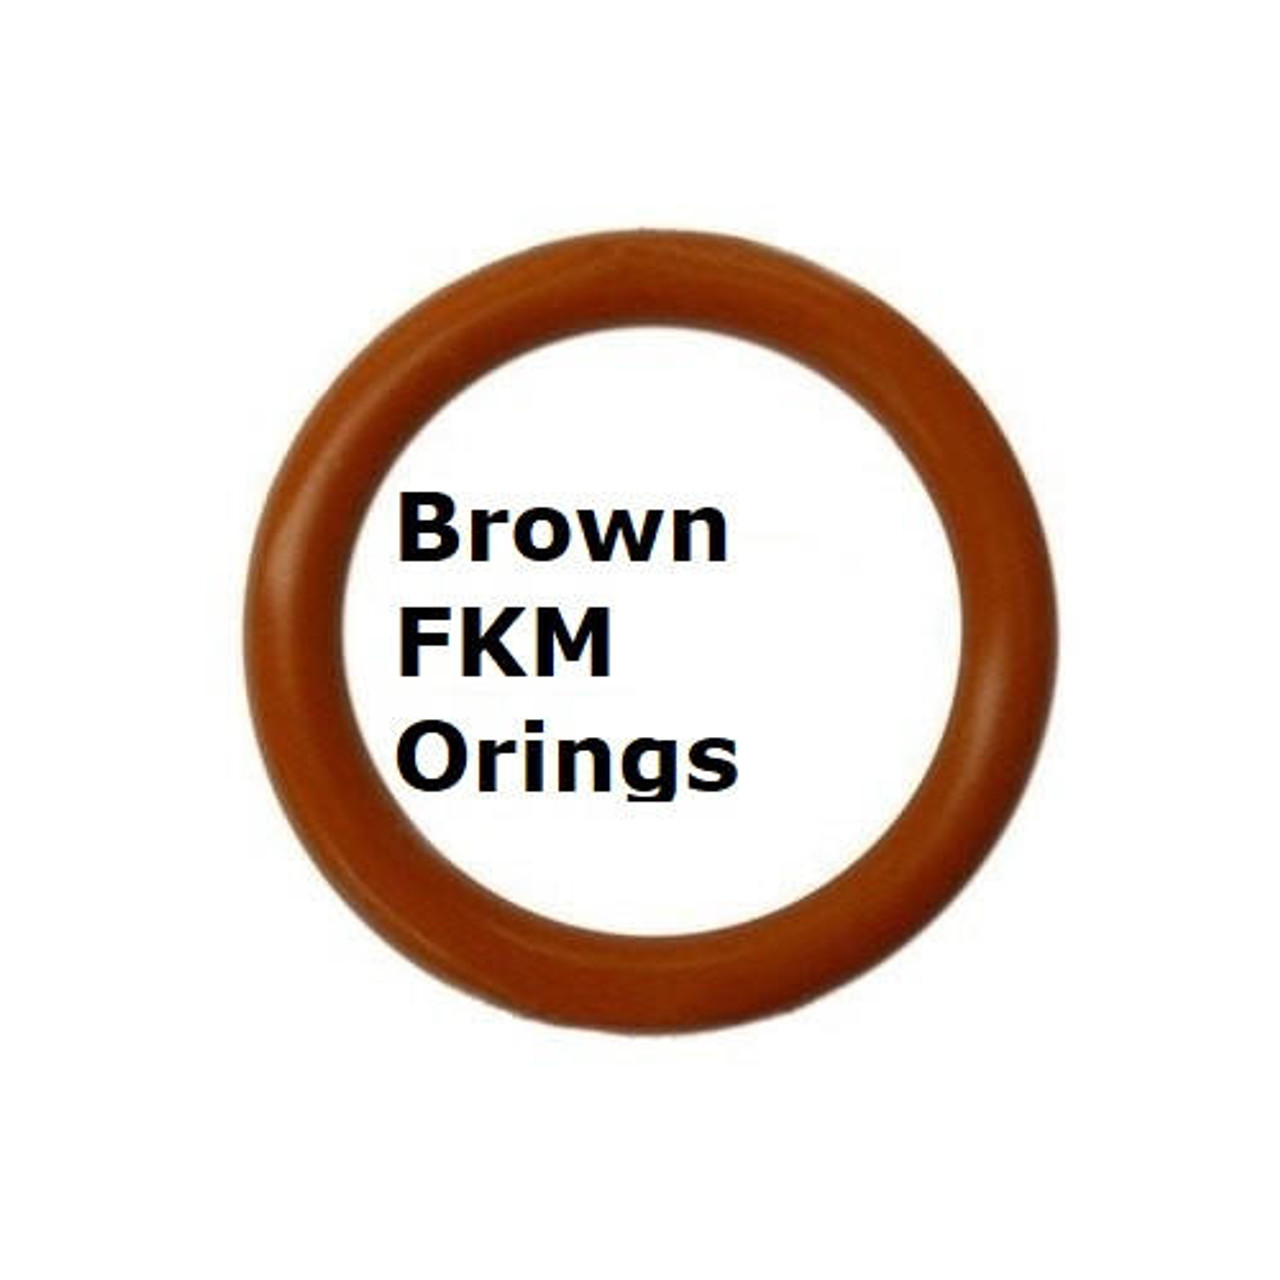 FKM Heat Resistant Brown O-rings  Size 106  Minimum 25 pcs